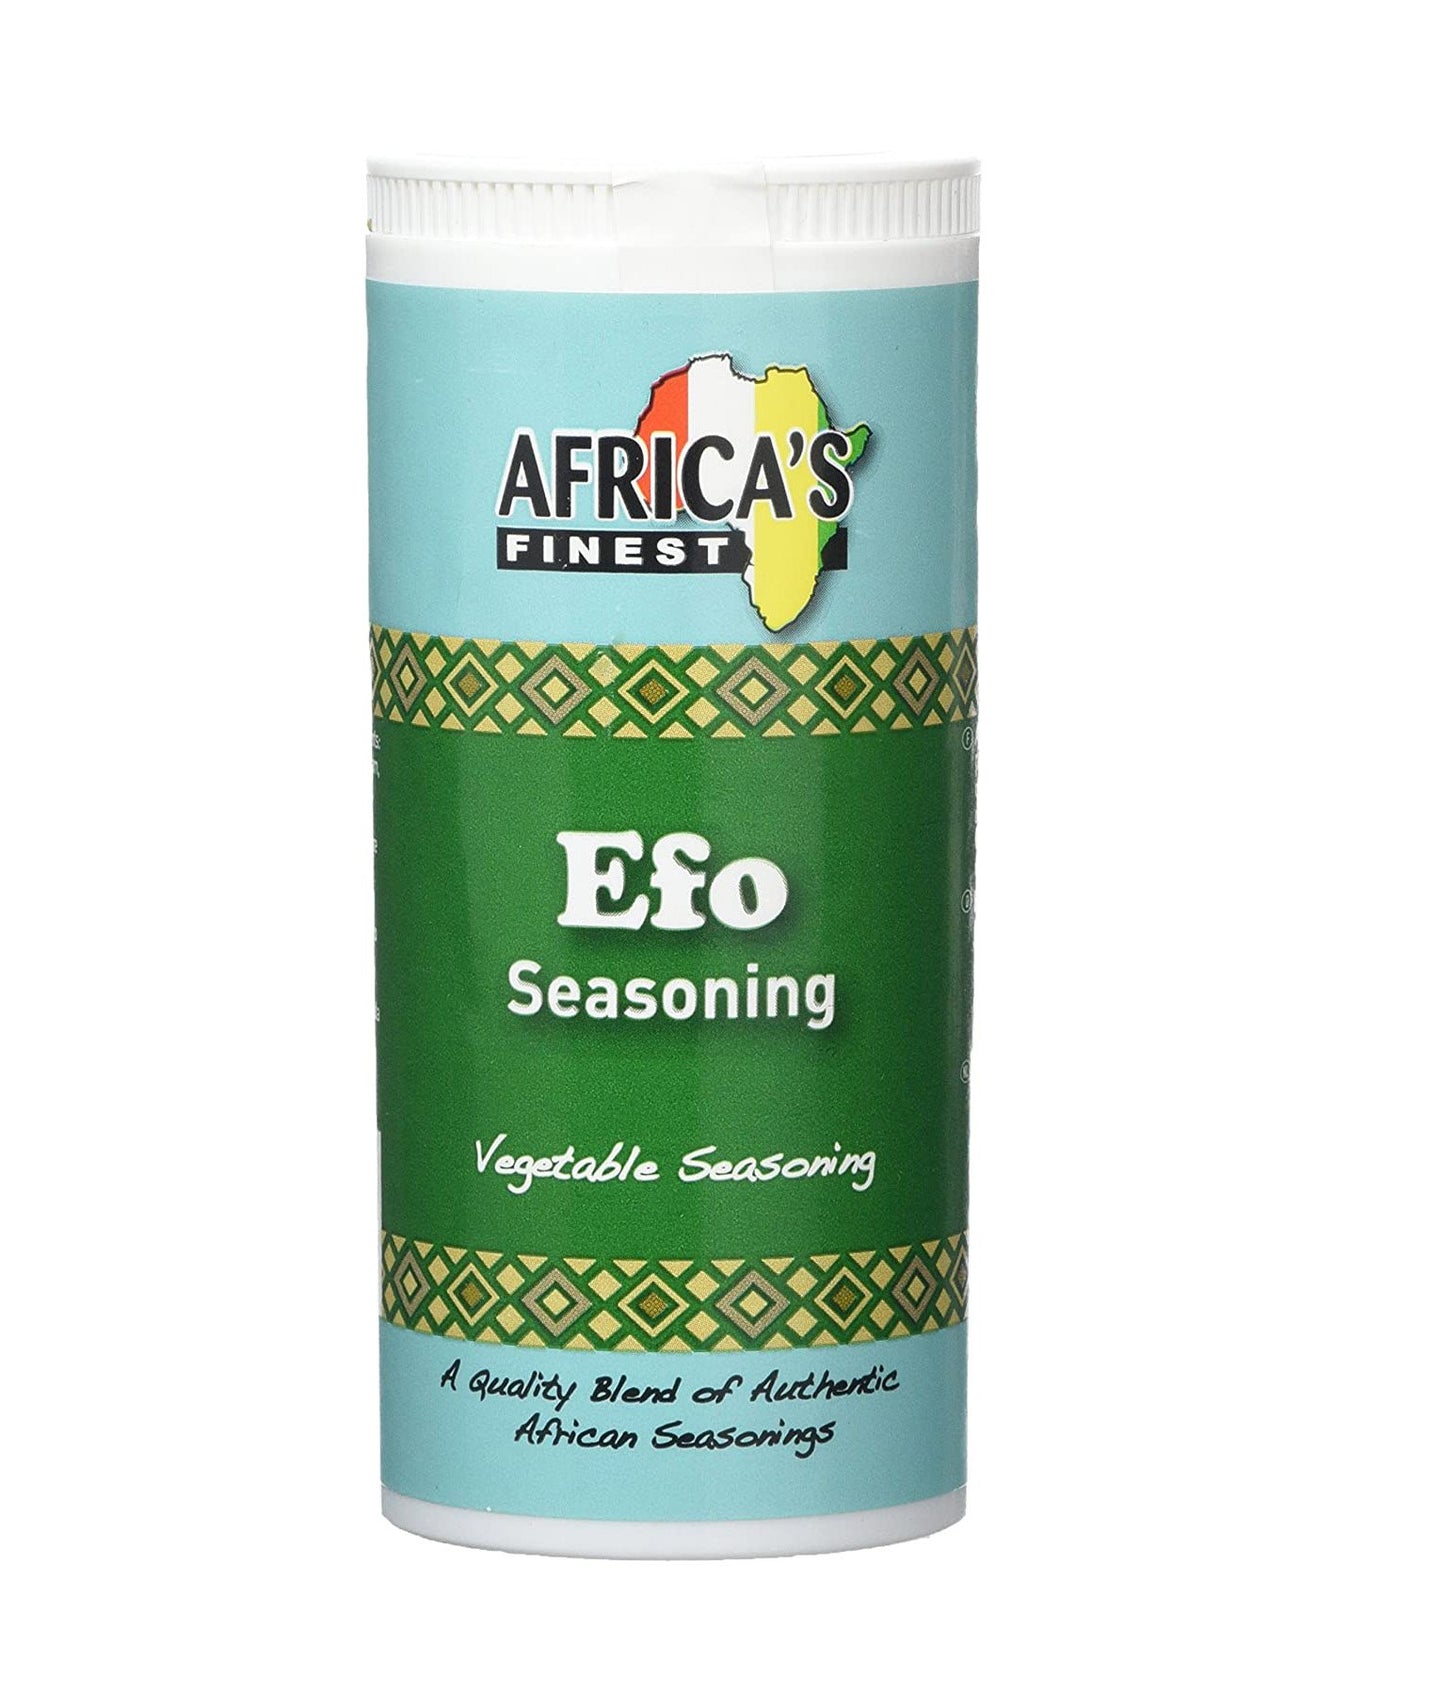 Africa's Finest Efo Seasoning 100g Box of 12